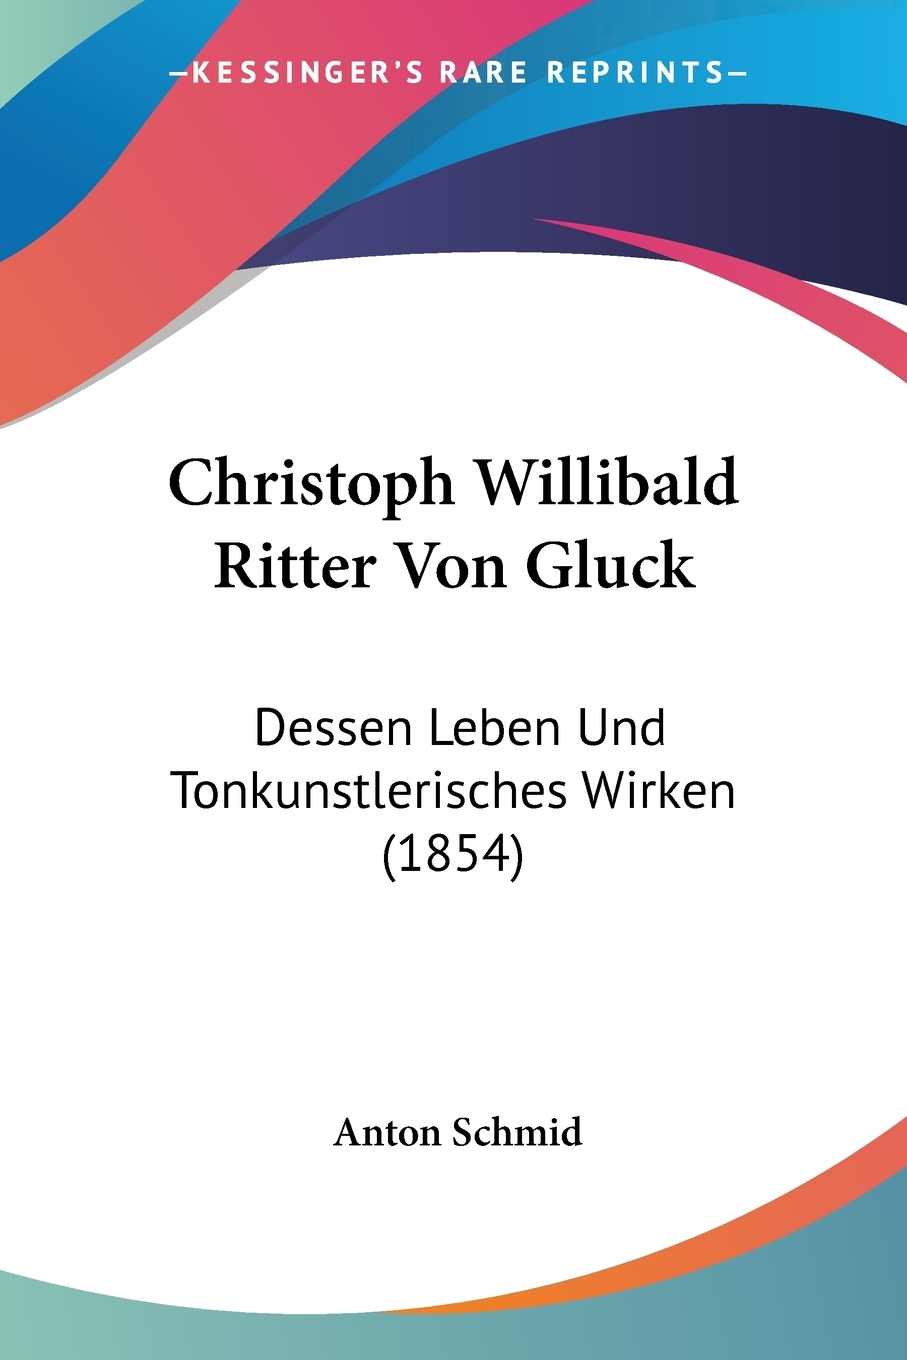 预售按需印刷 Christoph Willibald Ritter Von Gluck德语ger